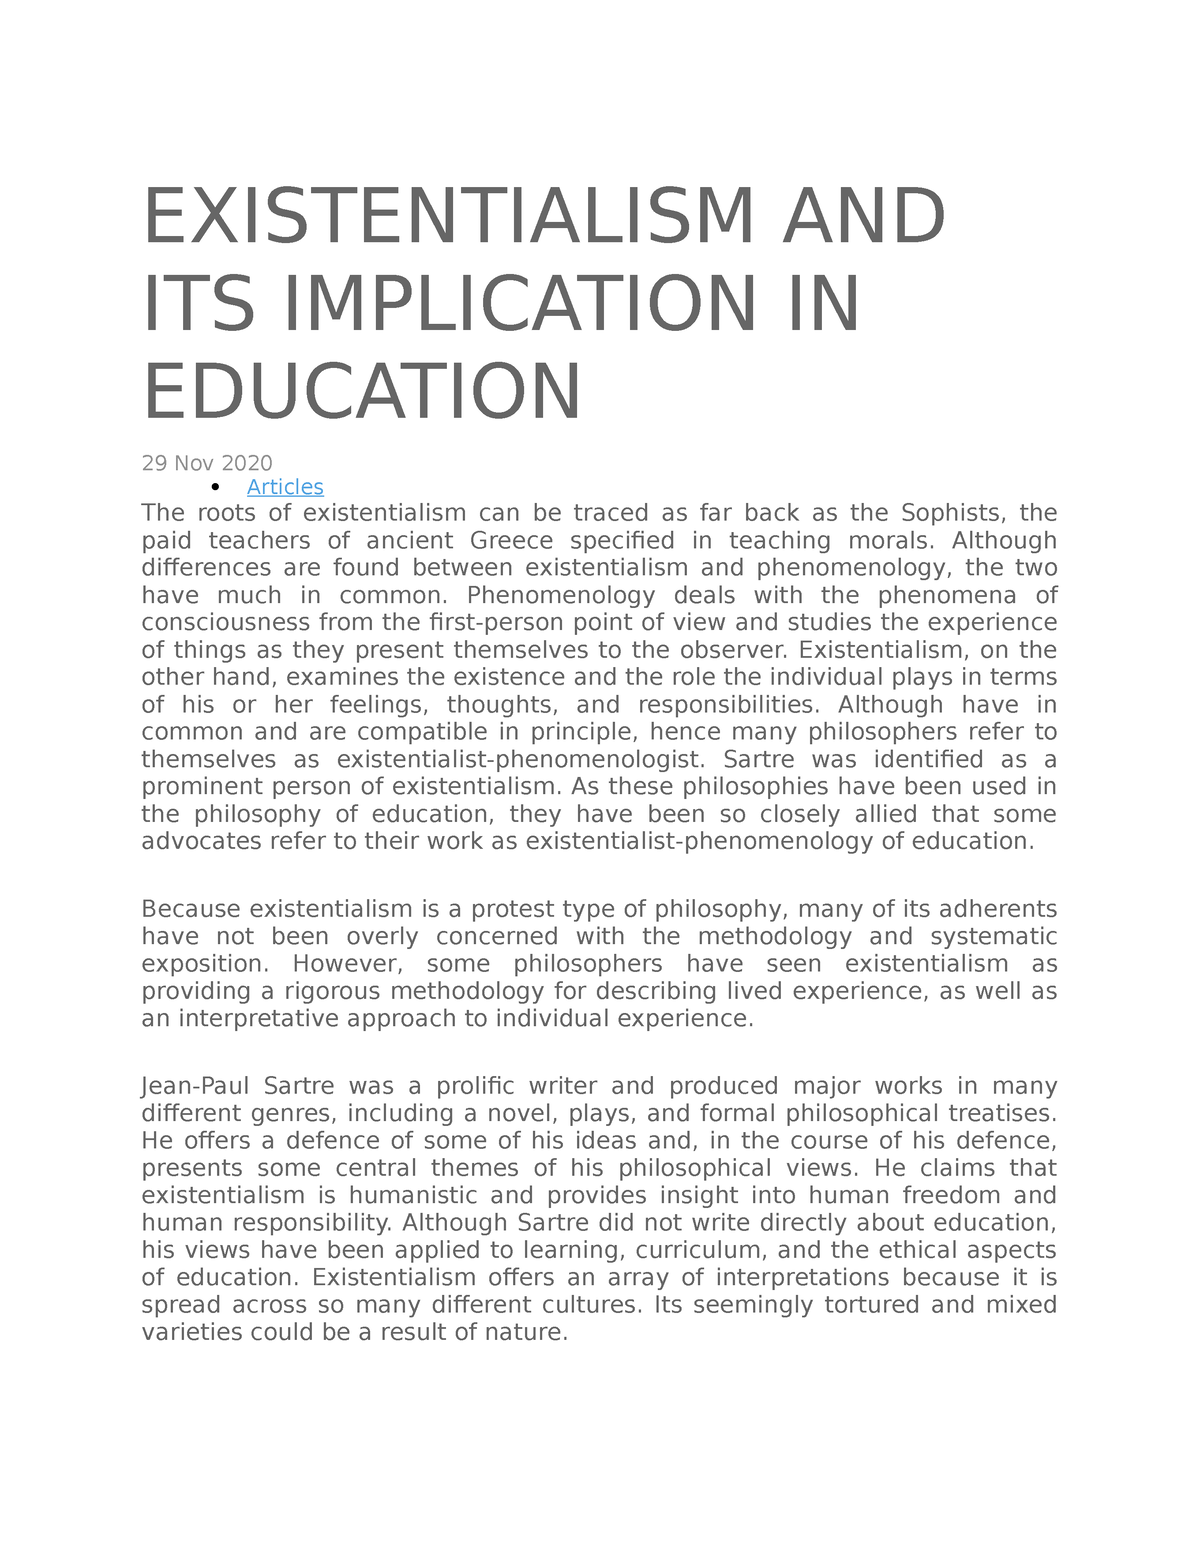 existentialism argumentative essay